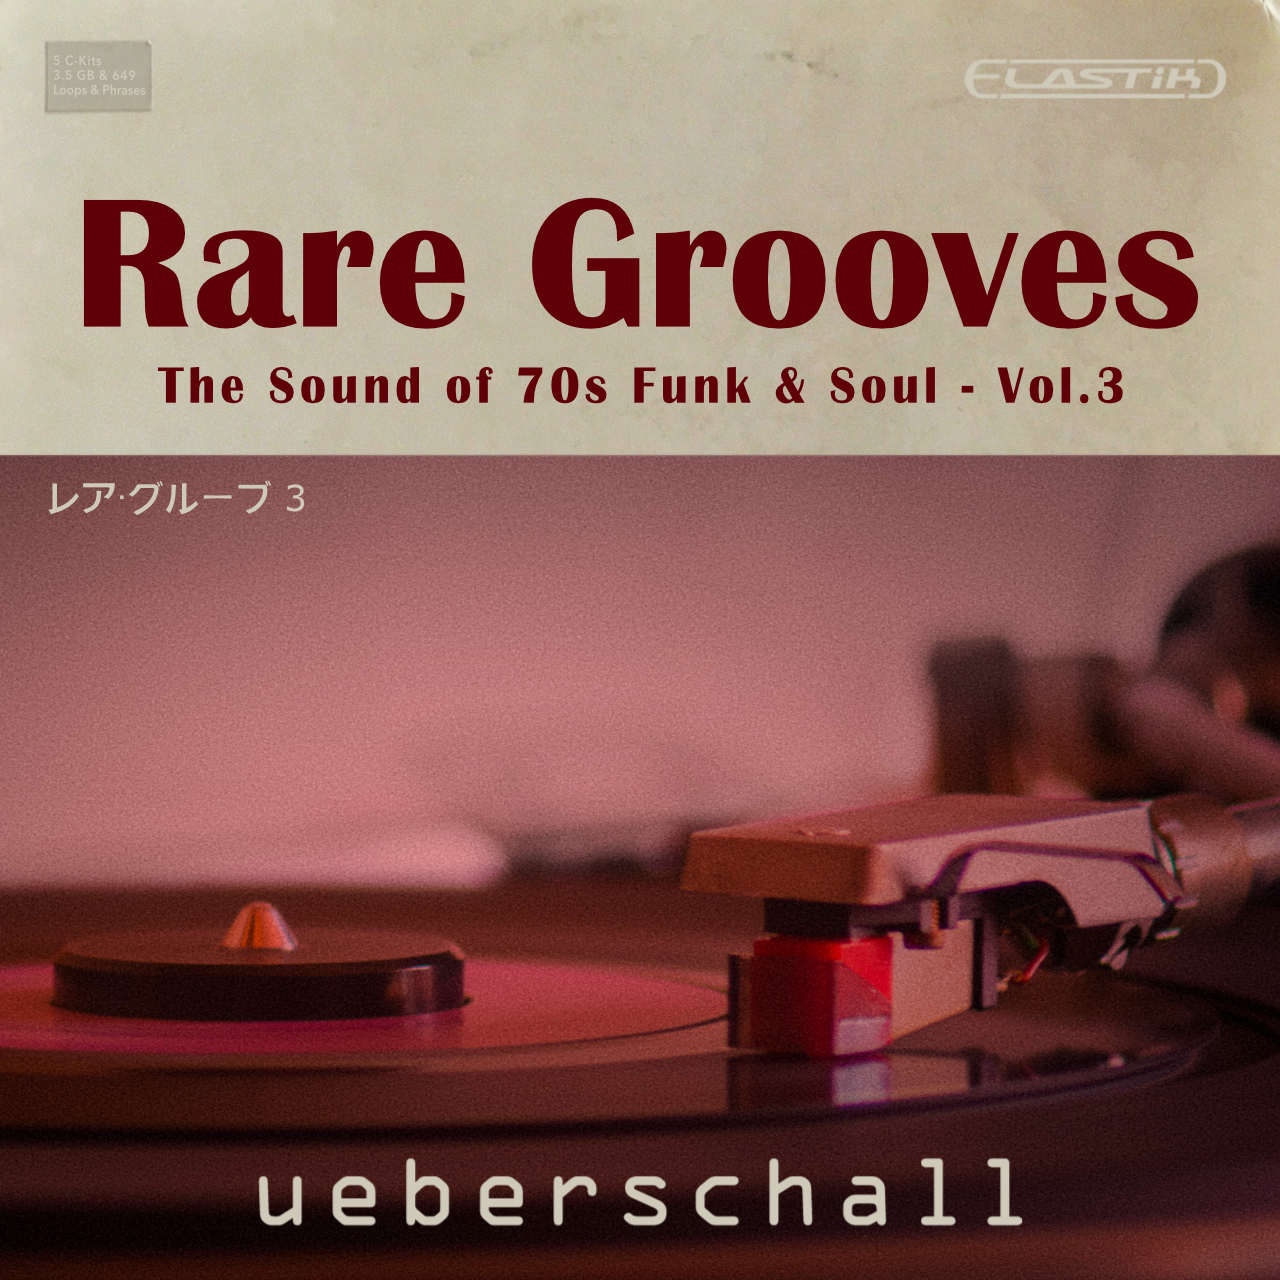 Rare Grooves Vol. 3 by Ueberschall - Elastik Soundbank Plugin VST VST3 ...